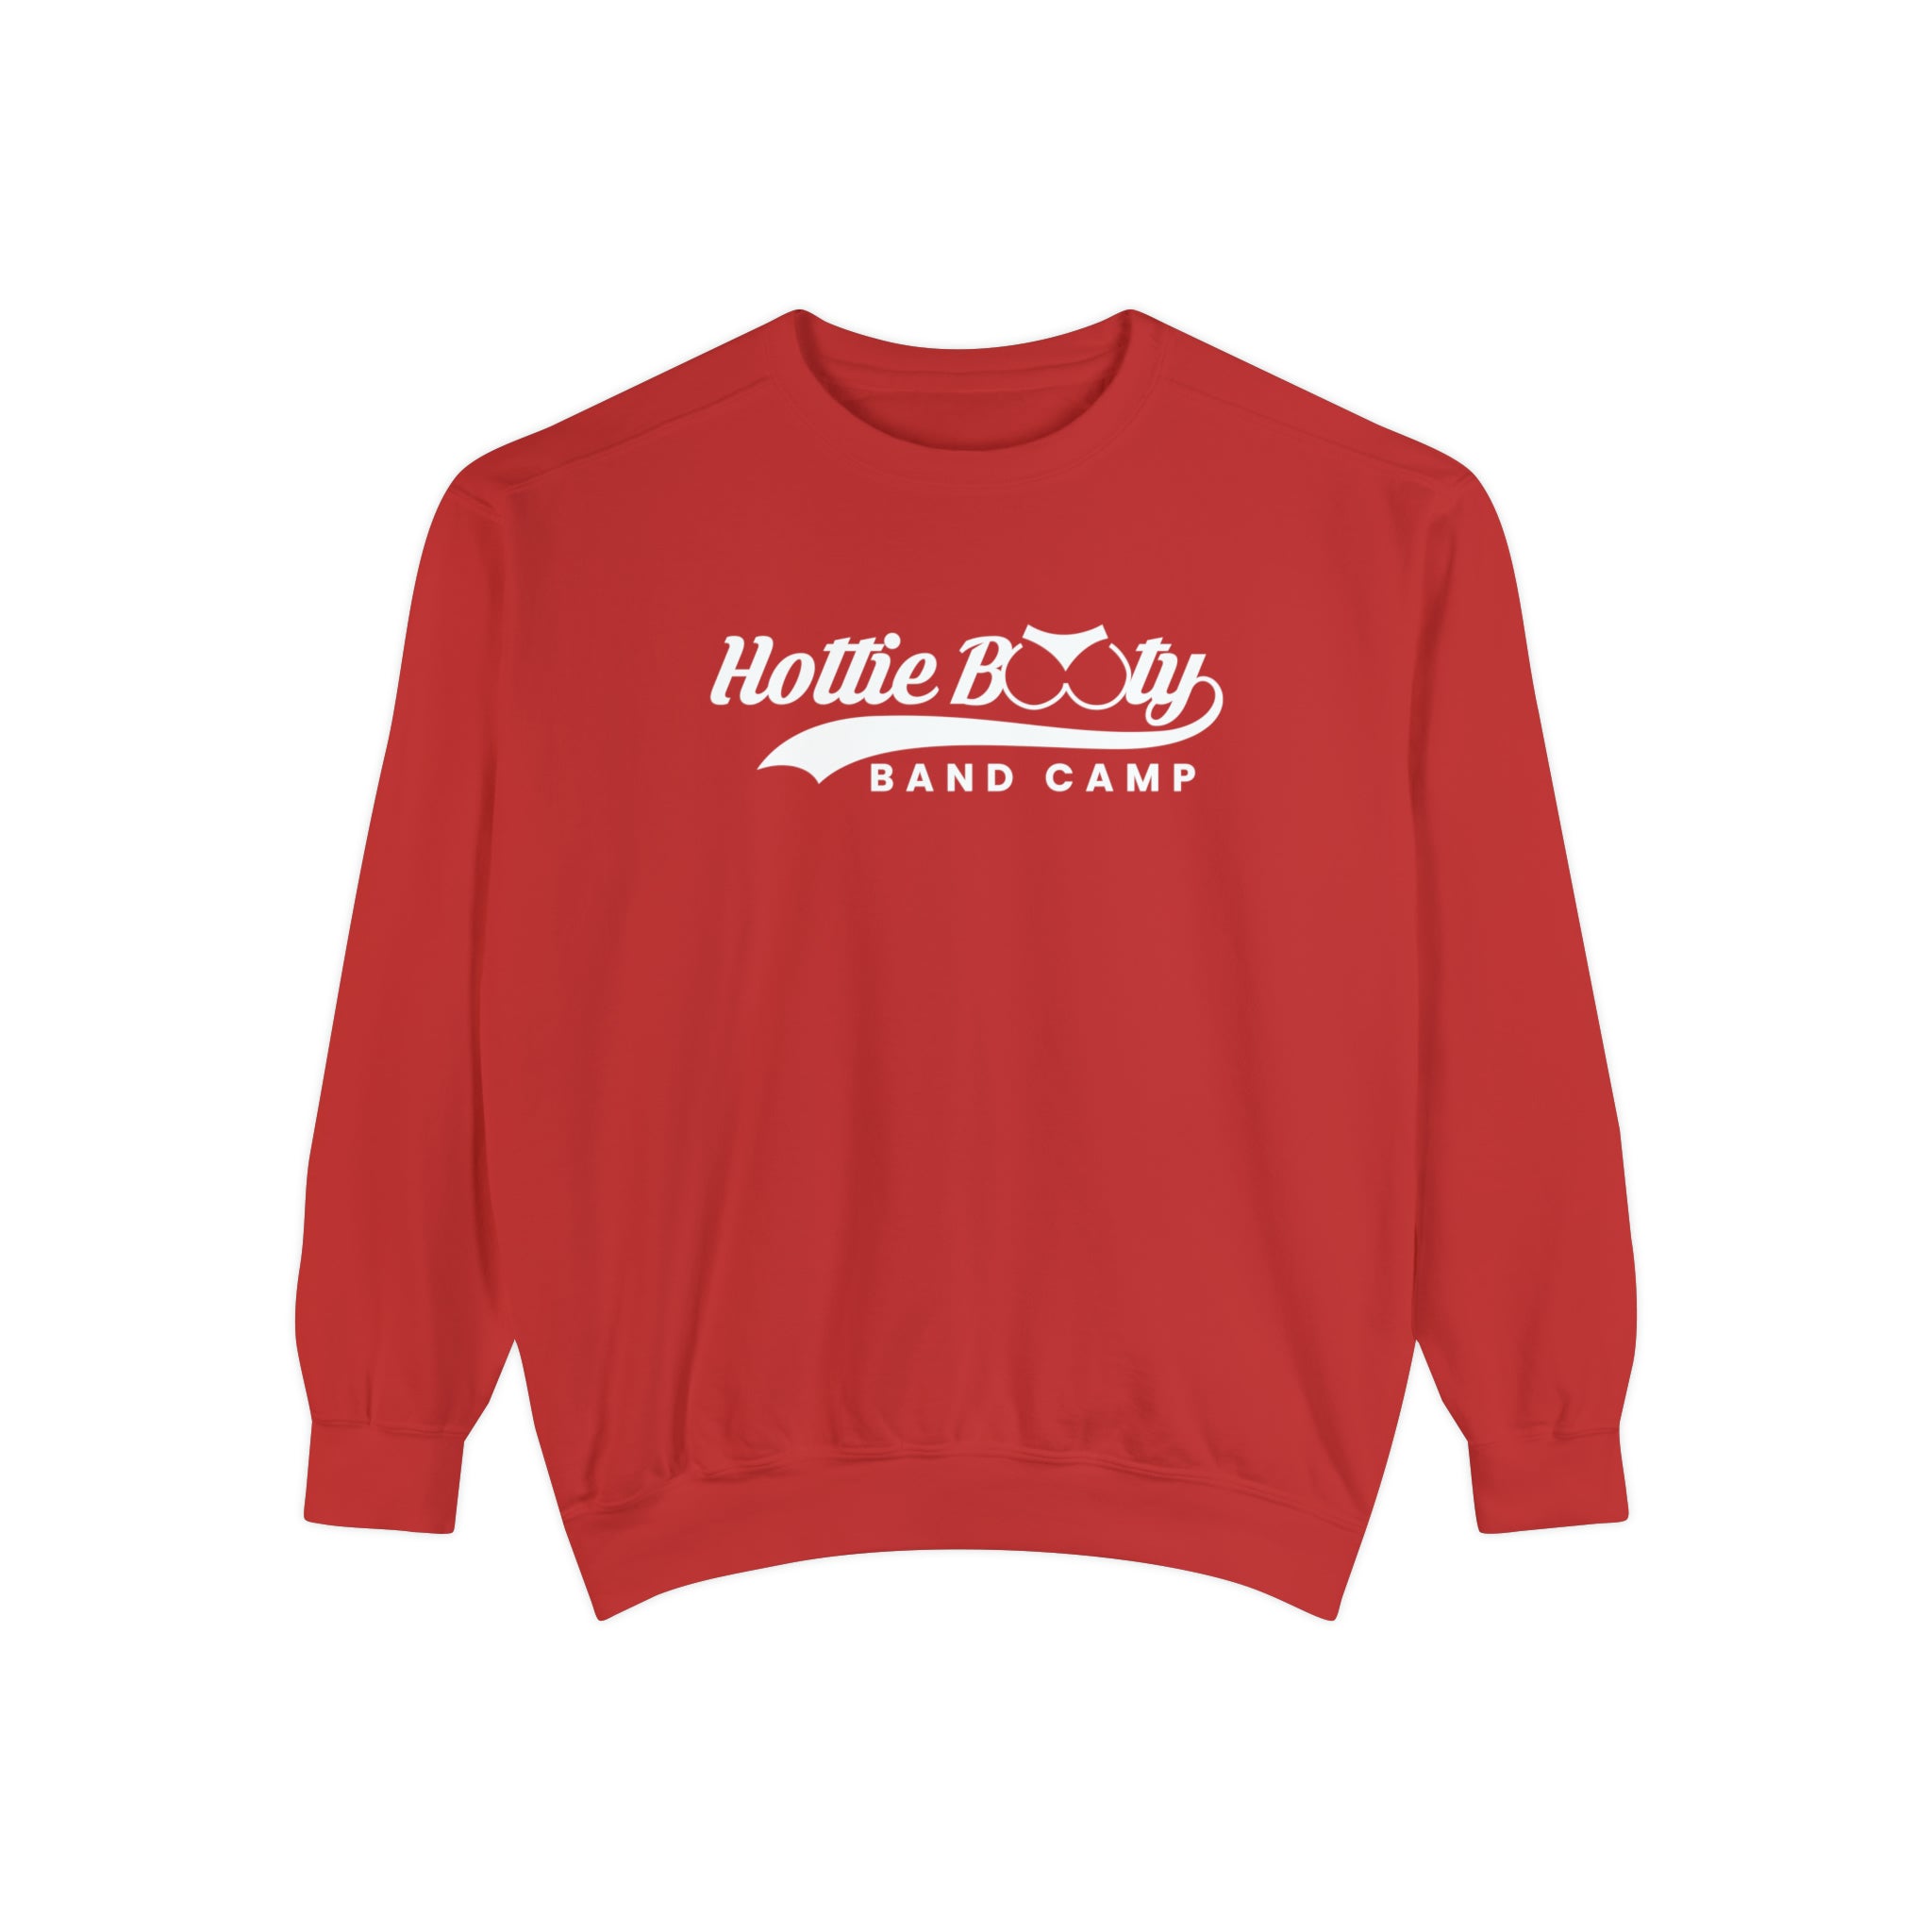 Hottie Booty Band Camp Unisex Sweatshirt (Dark Colors) - GlennSpin 